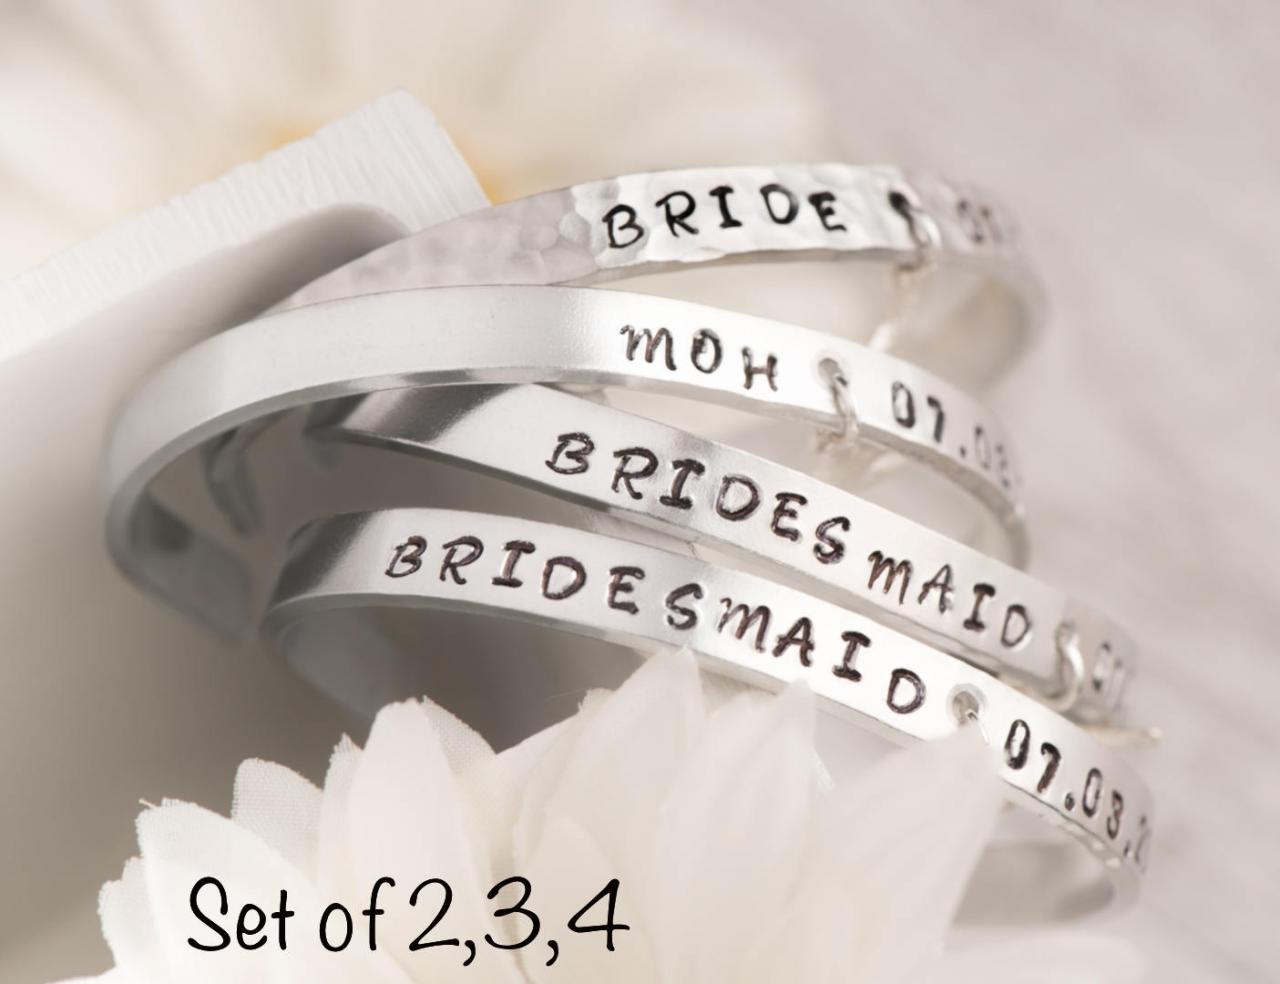 Hand stamped engraved bracelet bangle, starfish bridesmaid set of 2/3/4 bracelets bangle as hawaii wedding gift set - save the date engraved bangle set of 2/3 bridesmaids